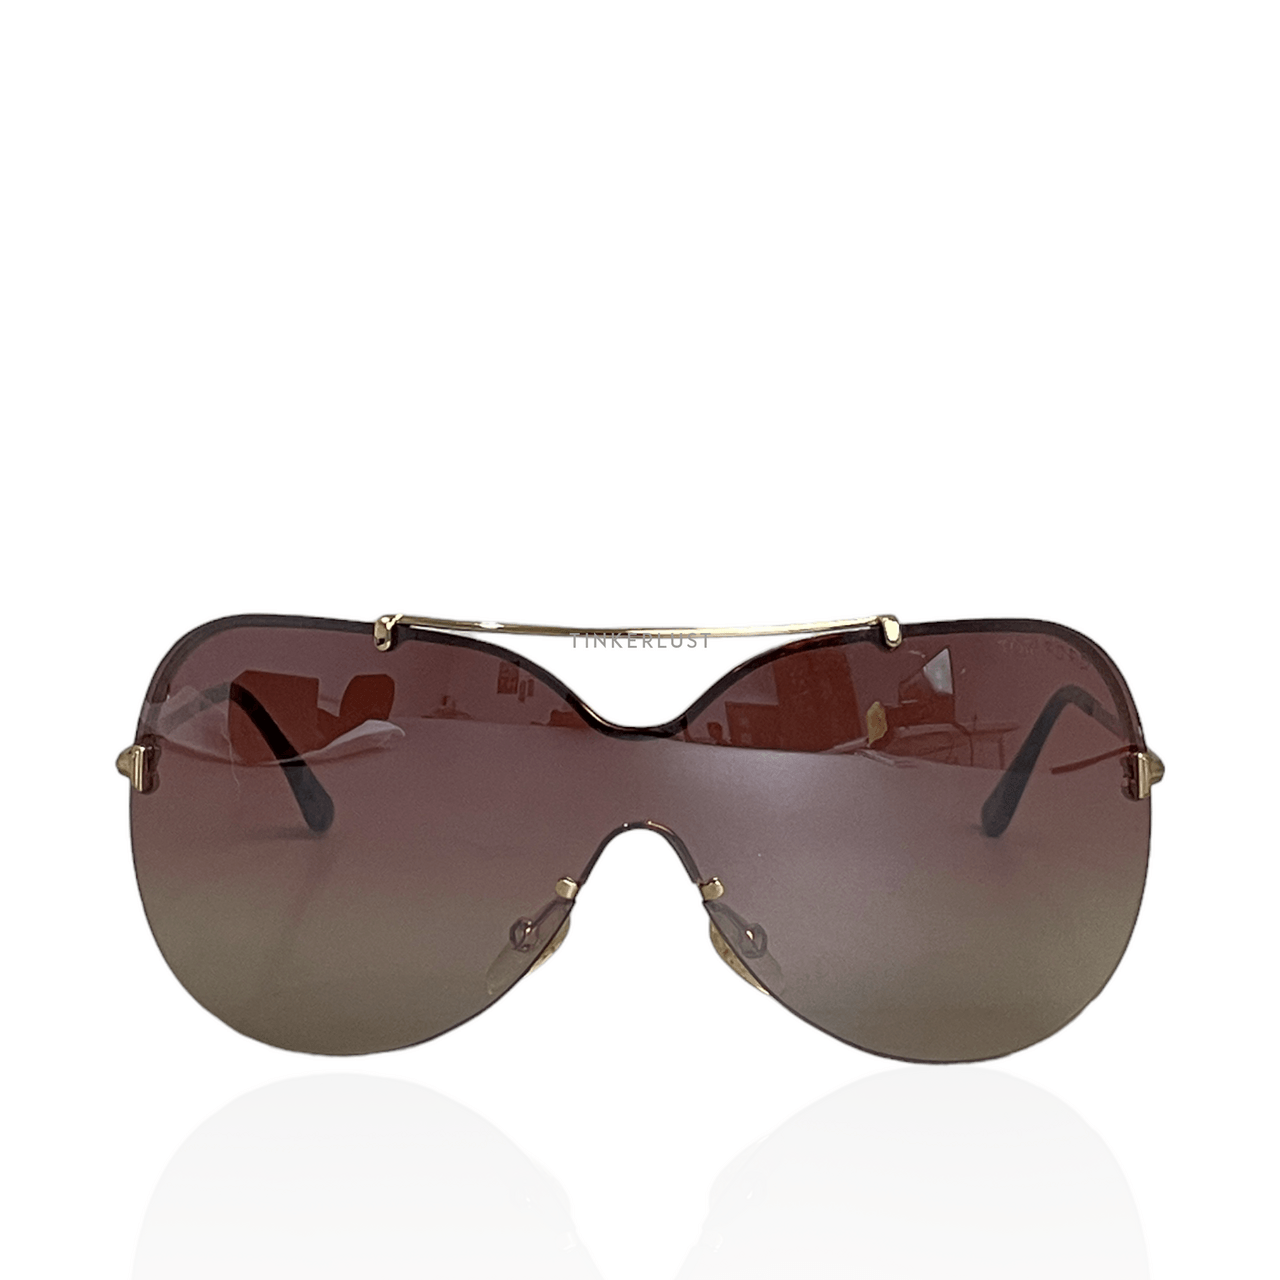 Tom Ford TF519 Ondria Mirrored Gradient Brown Sunglasses